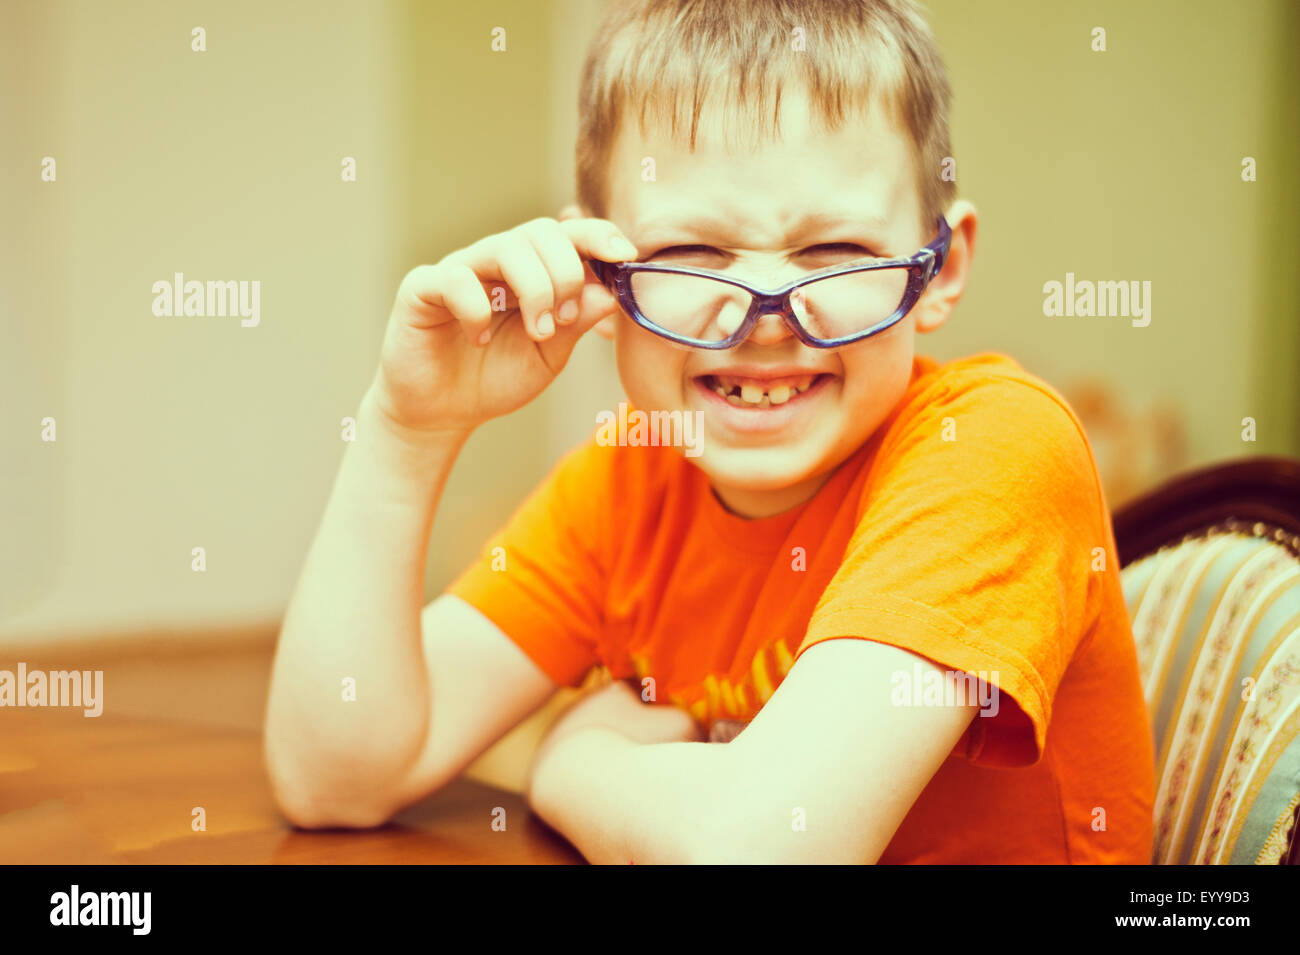 Caucasian boy peering over glasses Stock Photo